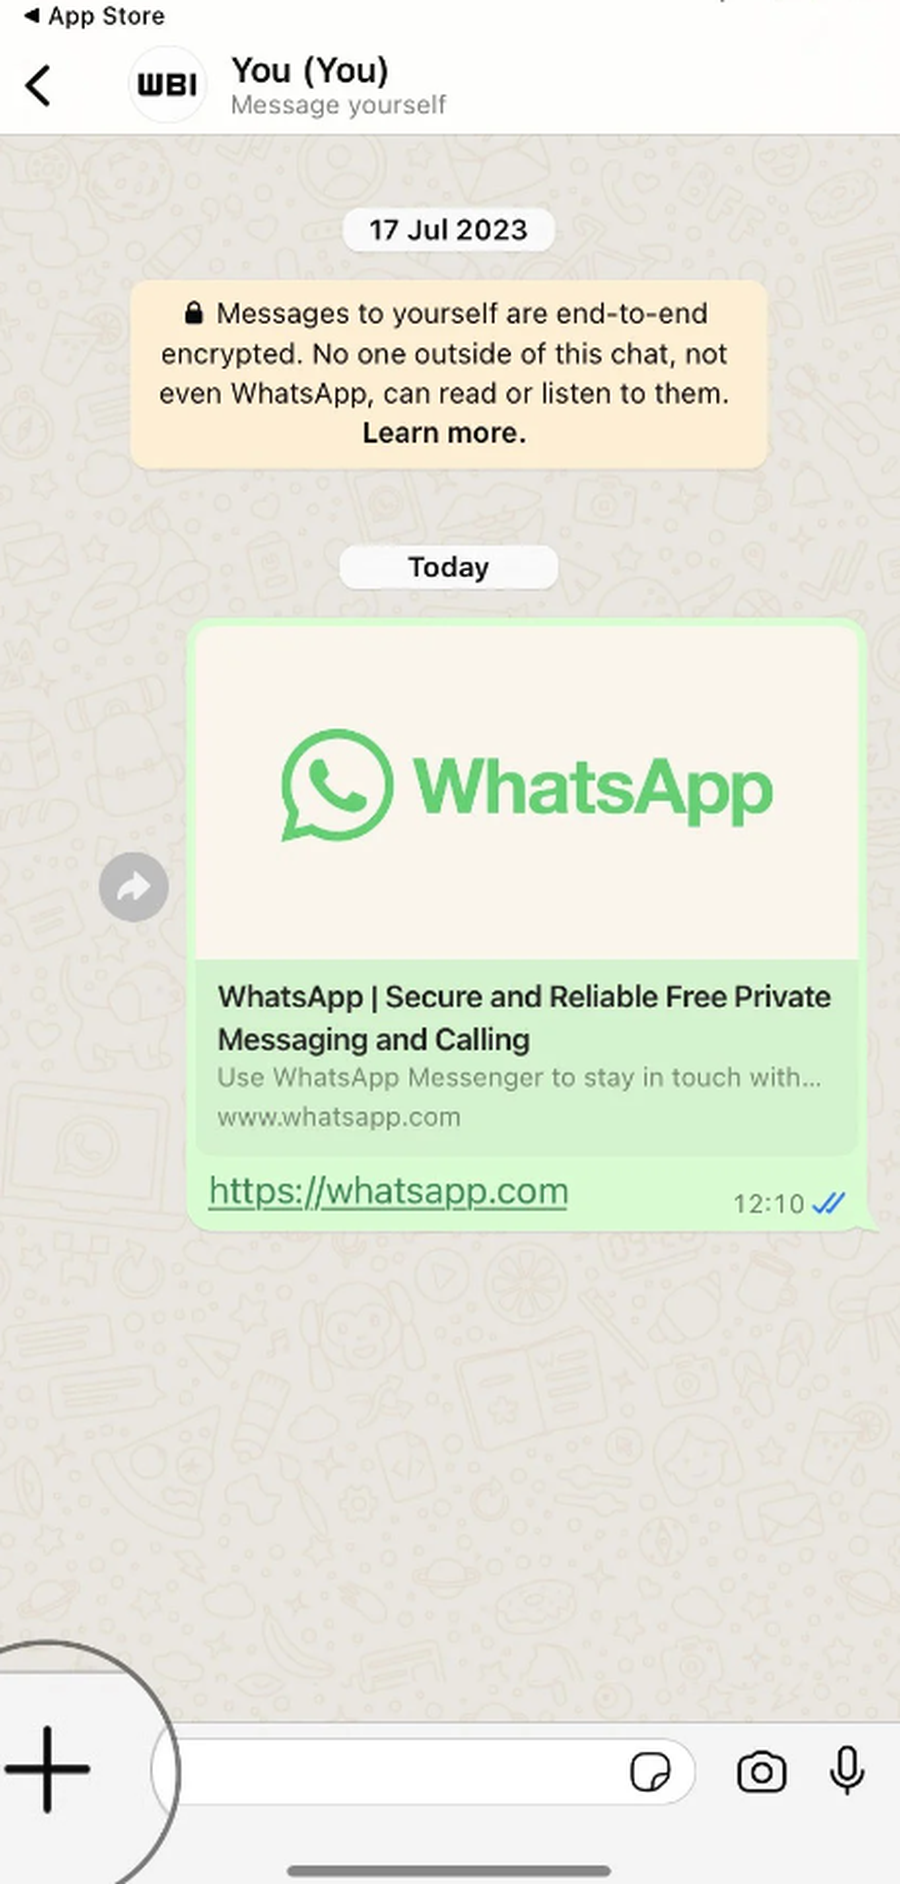 WhatsApp Streamlines Photo Sharing with Latest iOS Update